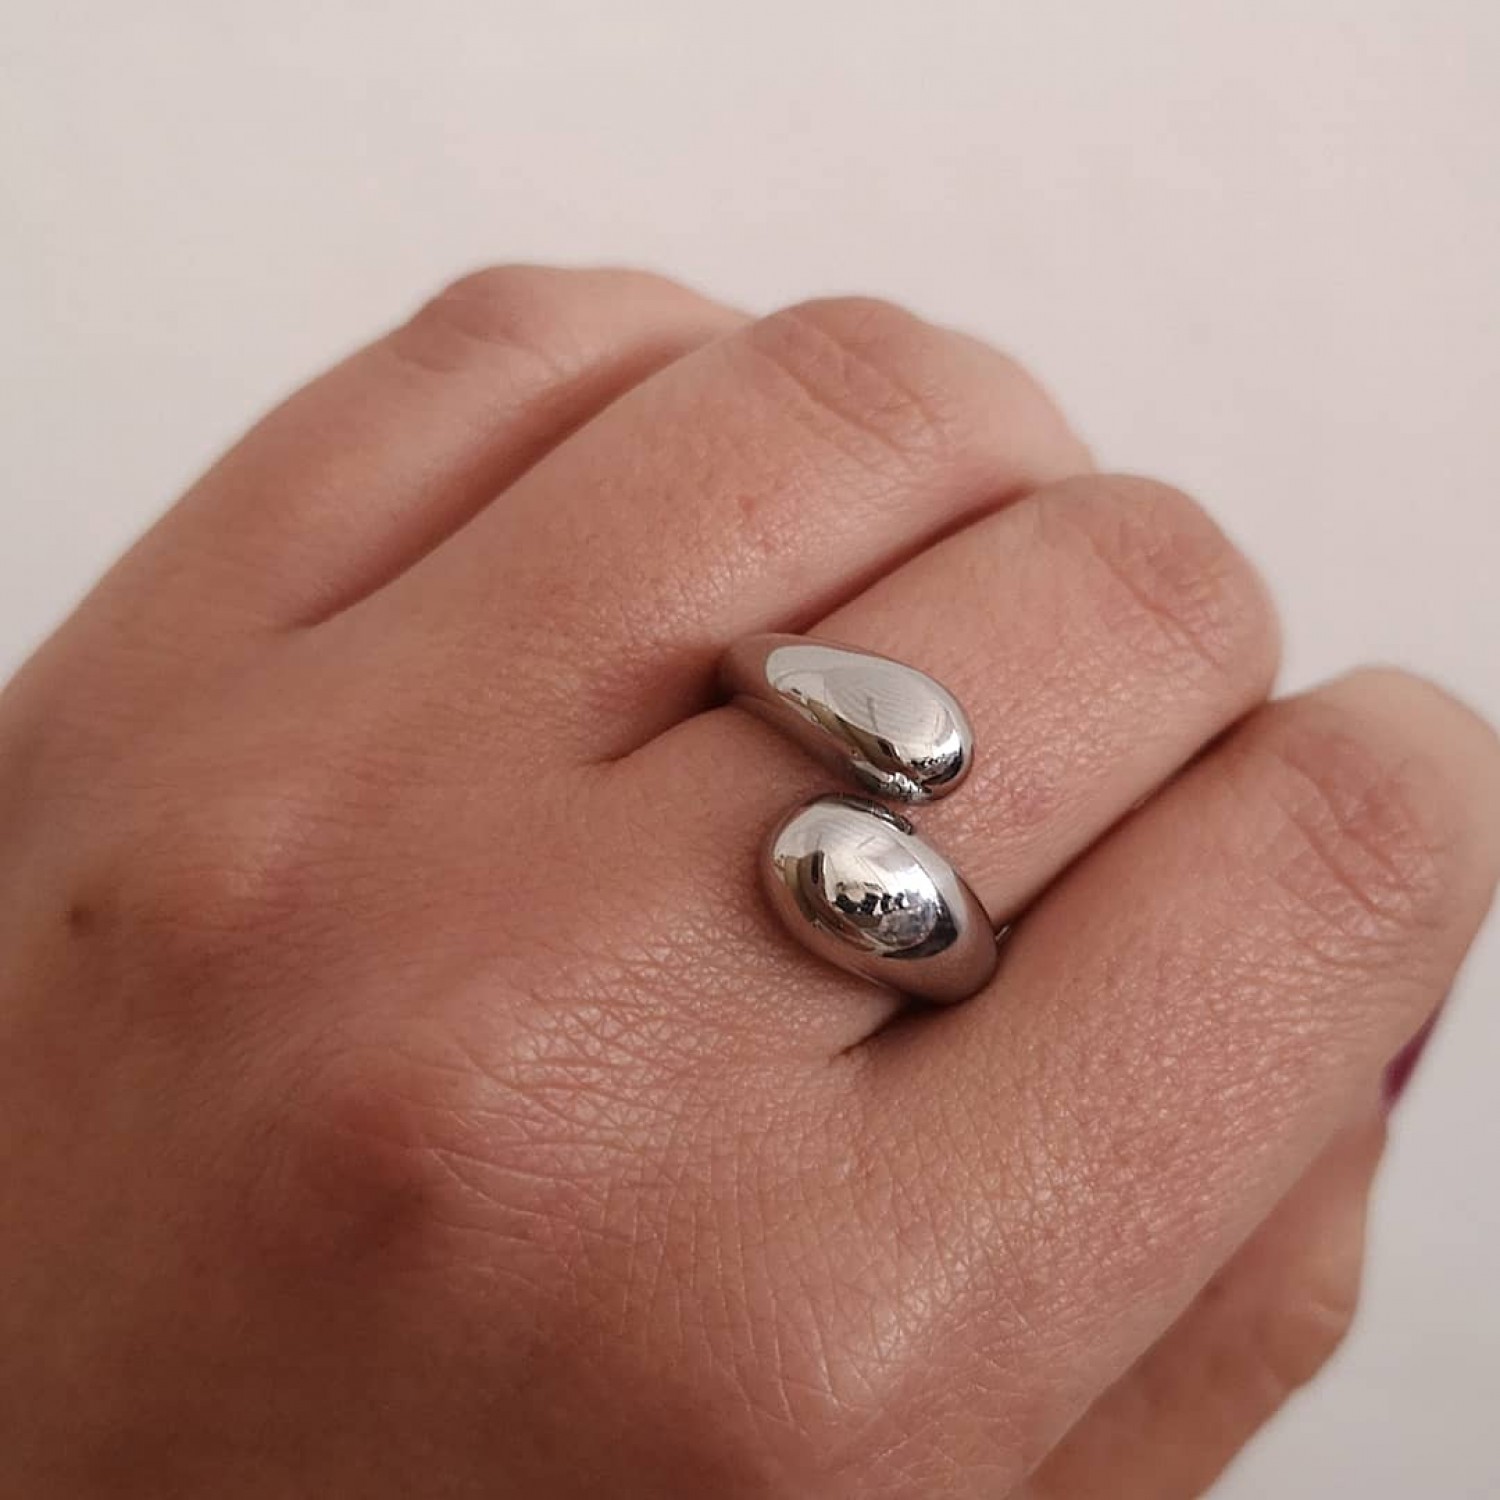 STAINLESS STEEL δαχτυλίδι ατσάλι ασημί.